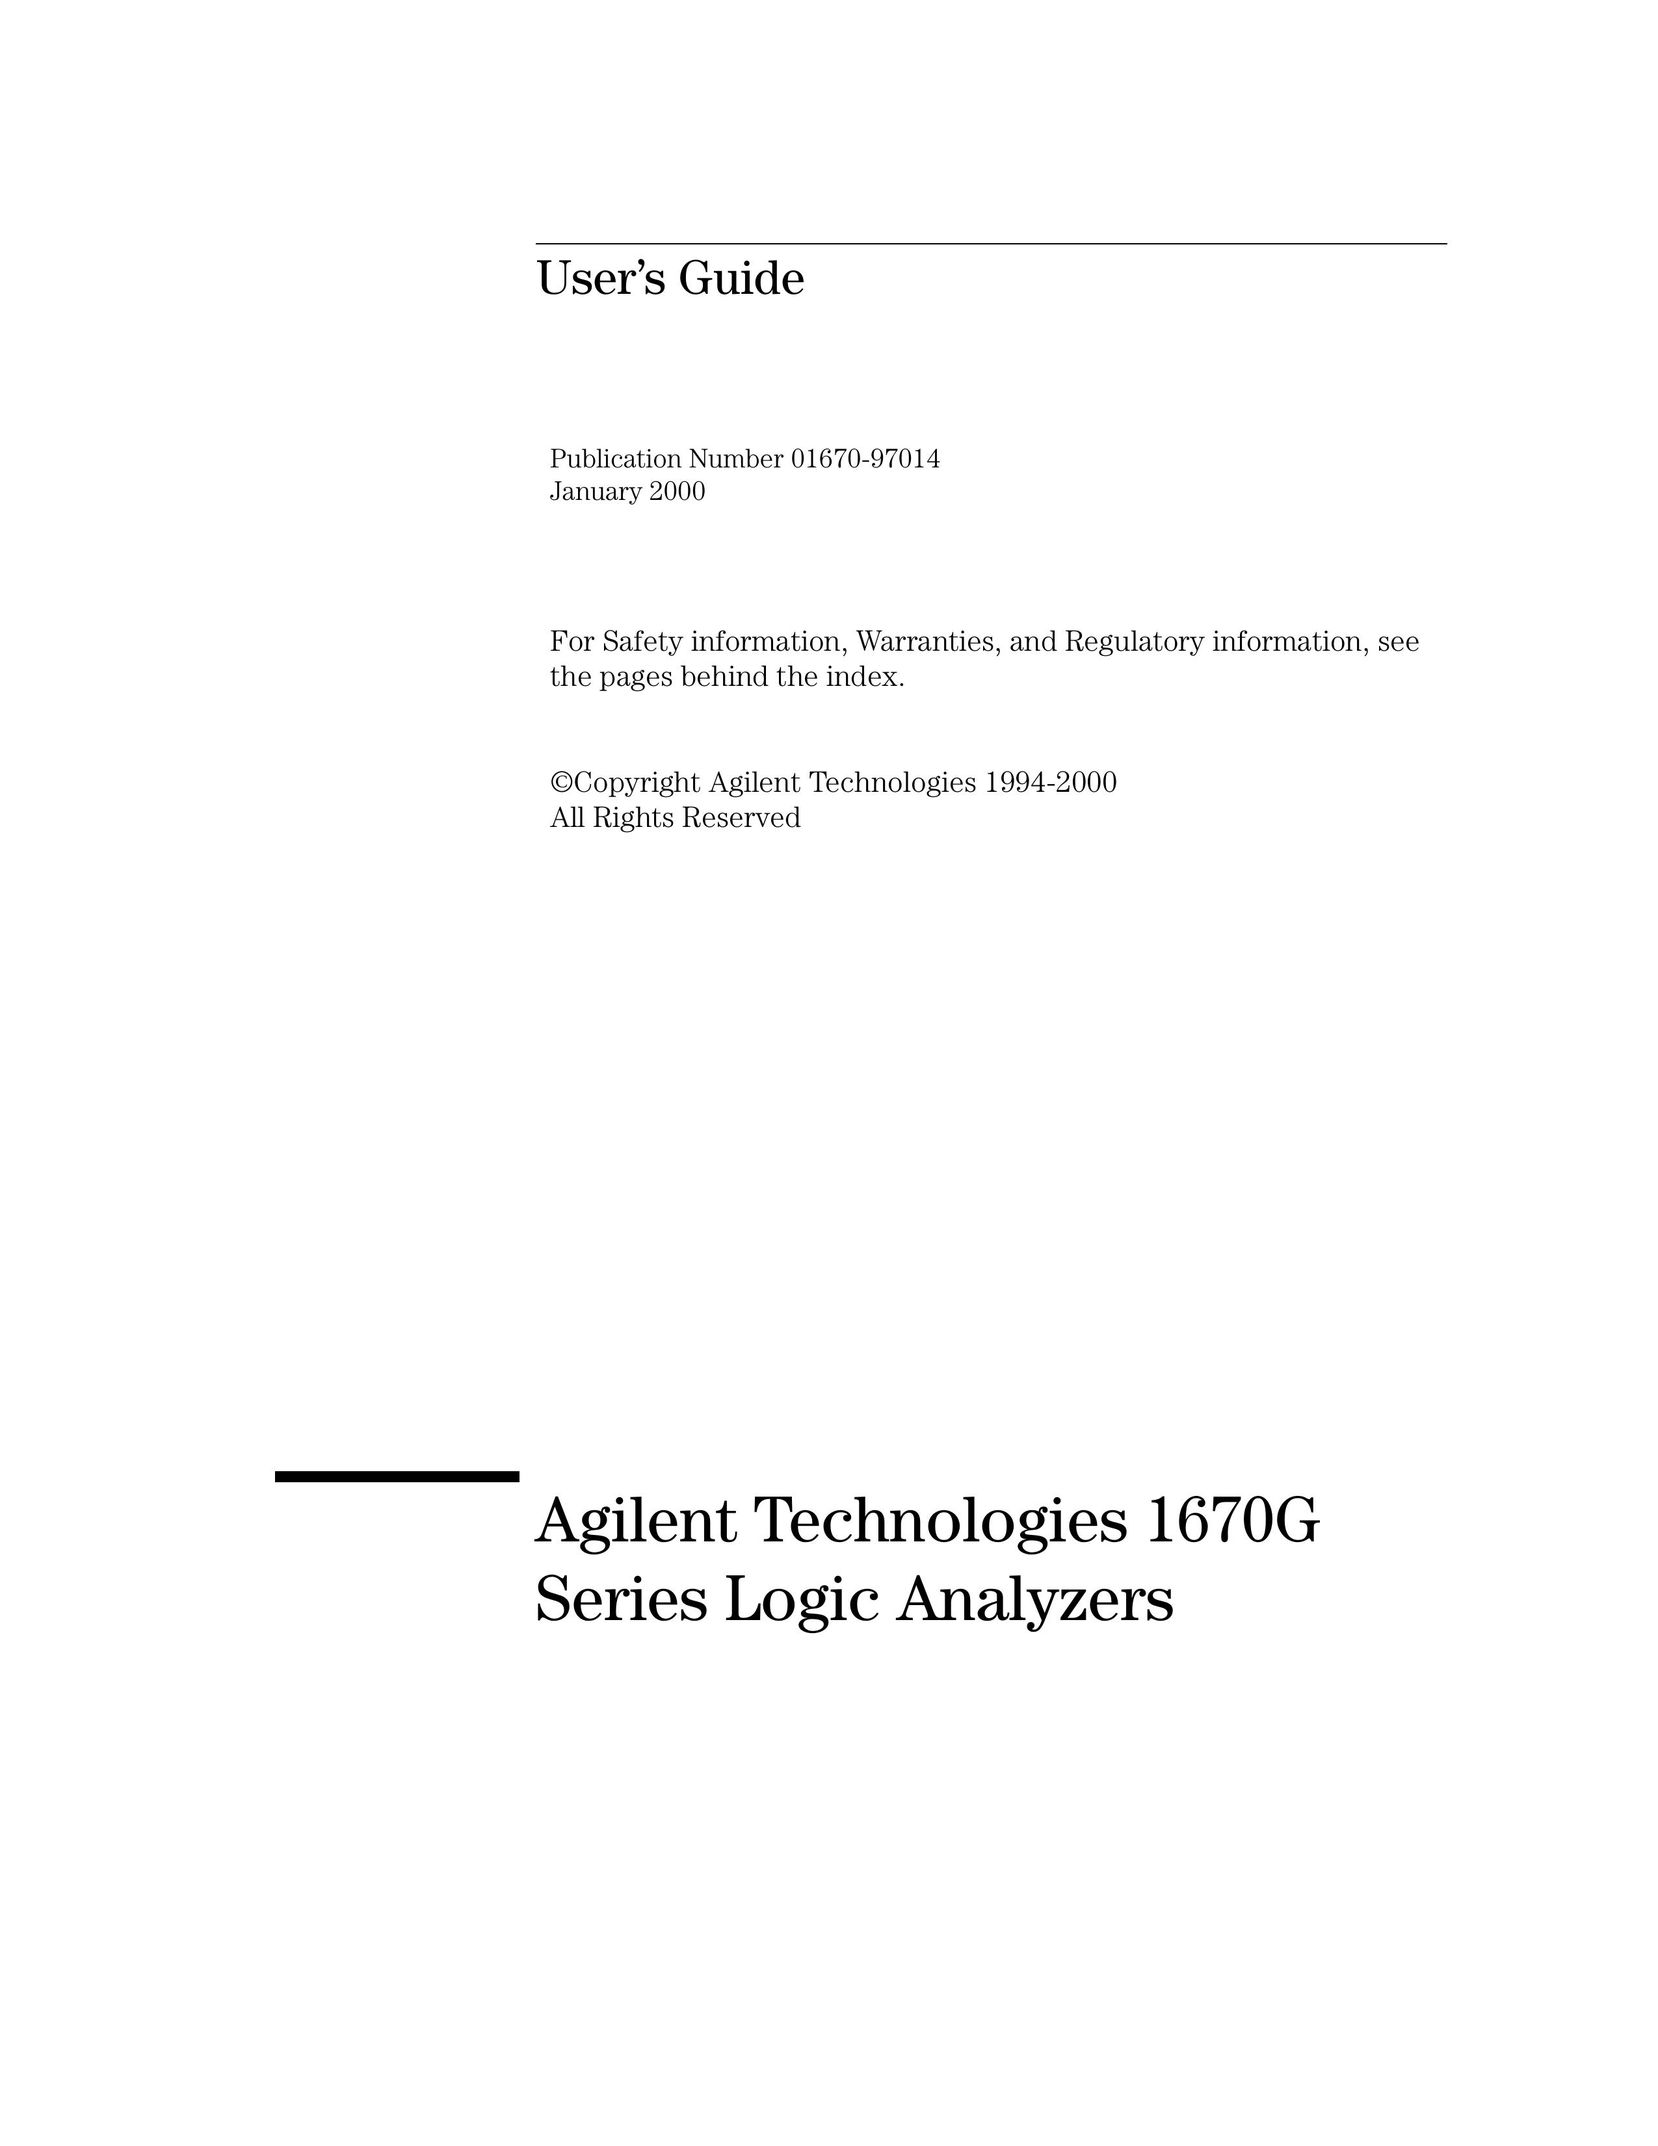 Agilent Technologies 1670G Network Hardware User Manual